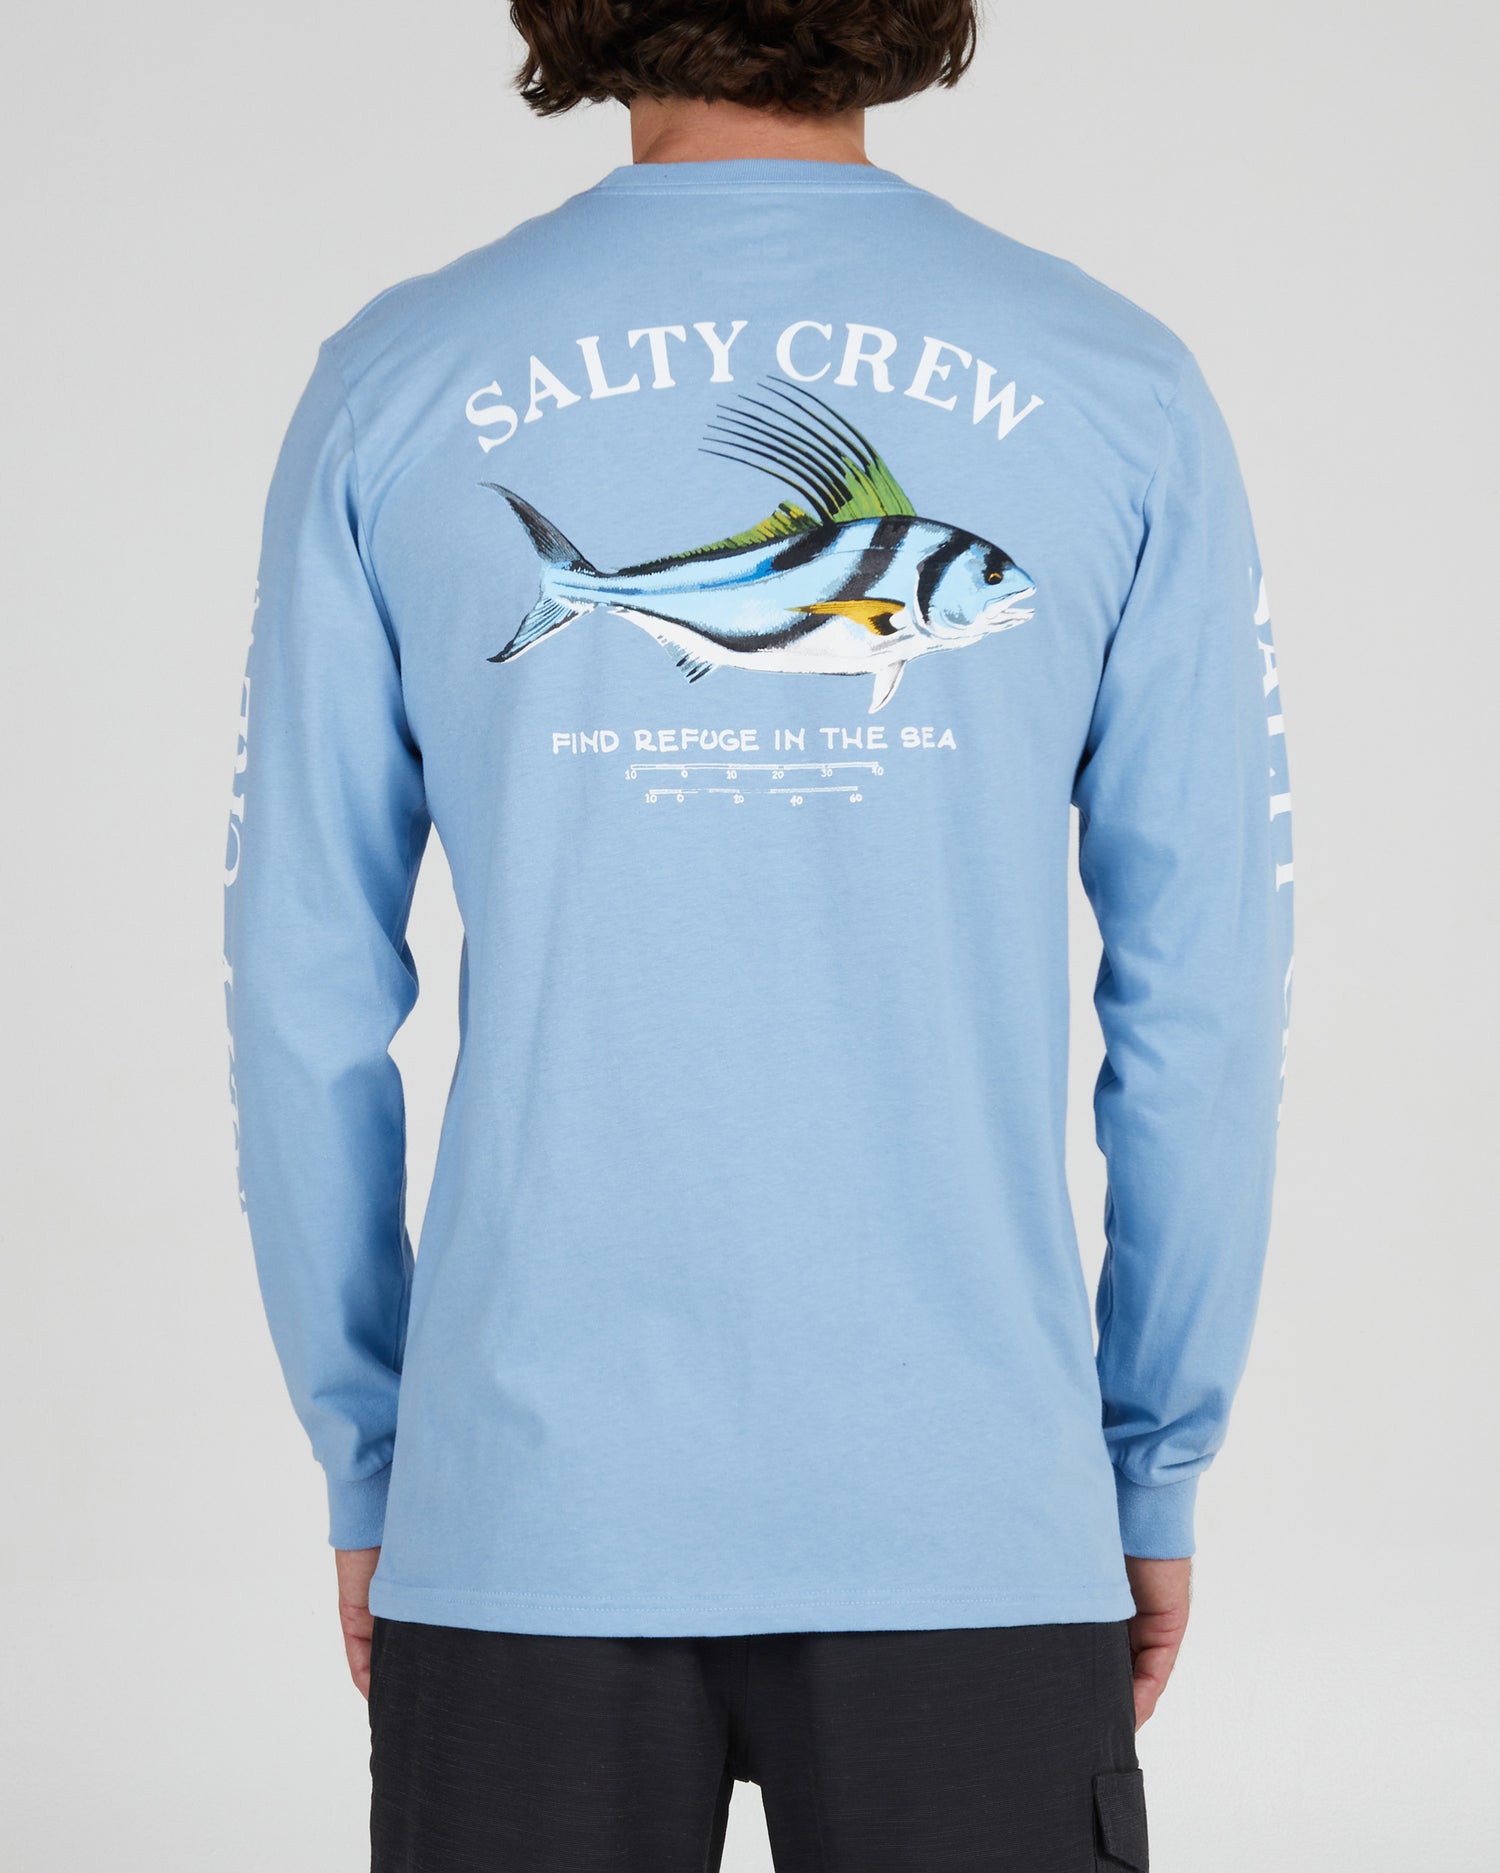 Salty Crew Rooster Premium Long Sleeve T-Shirt - Marine Blue